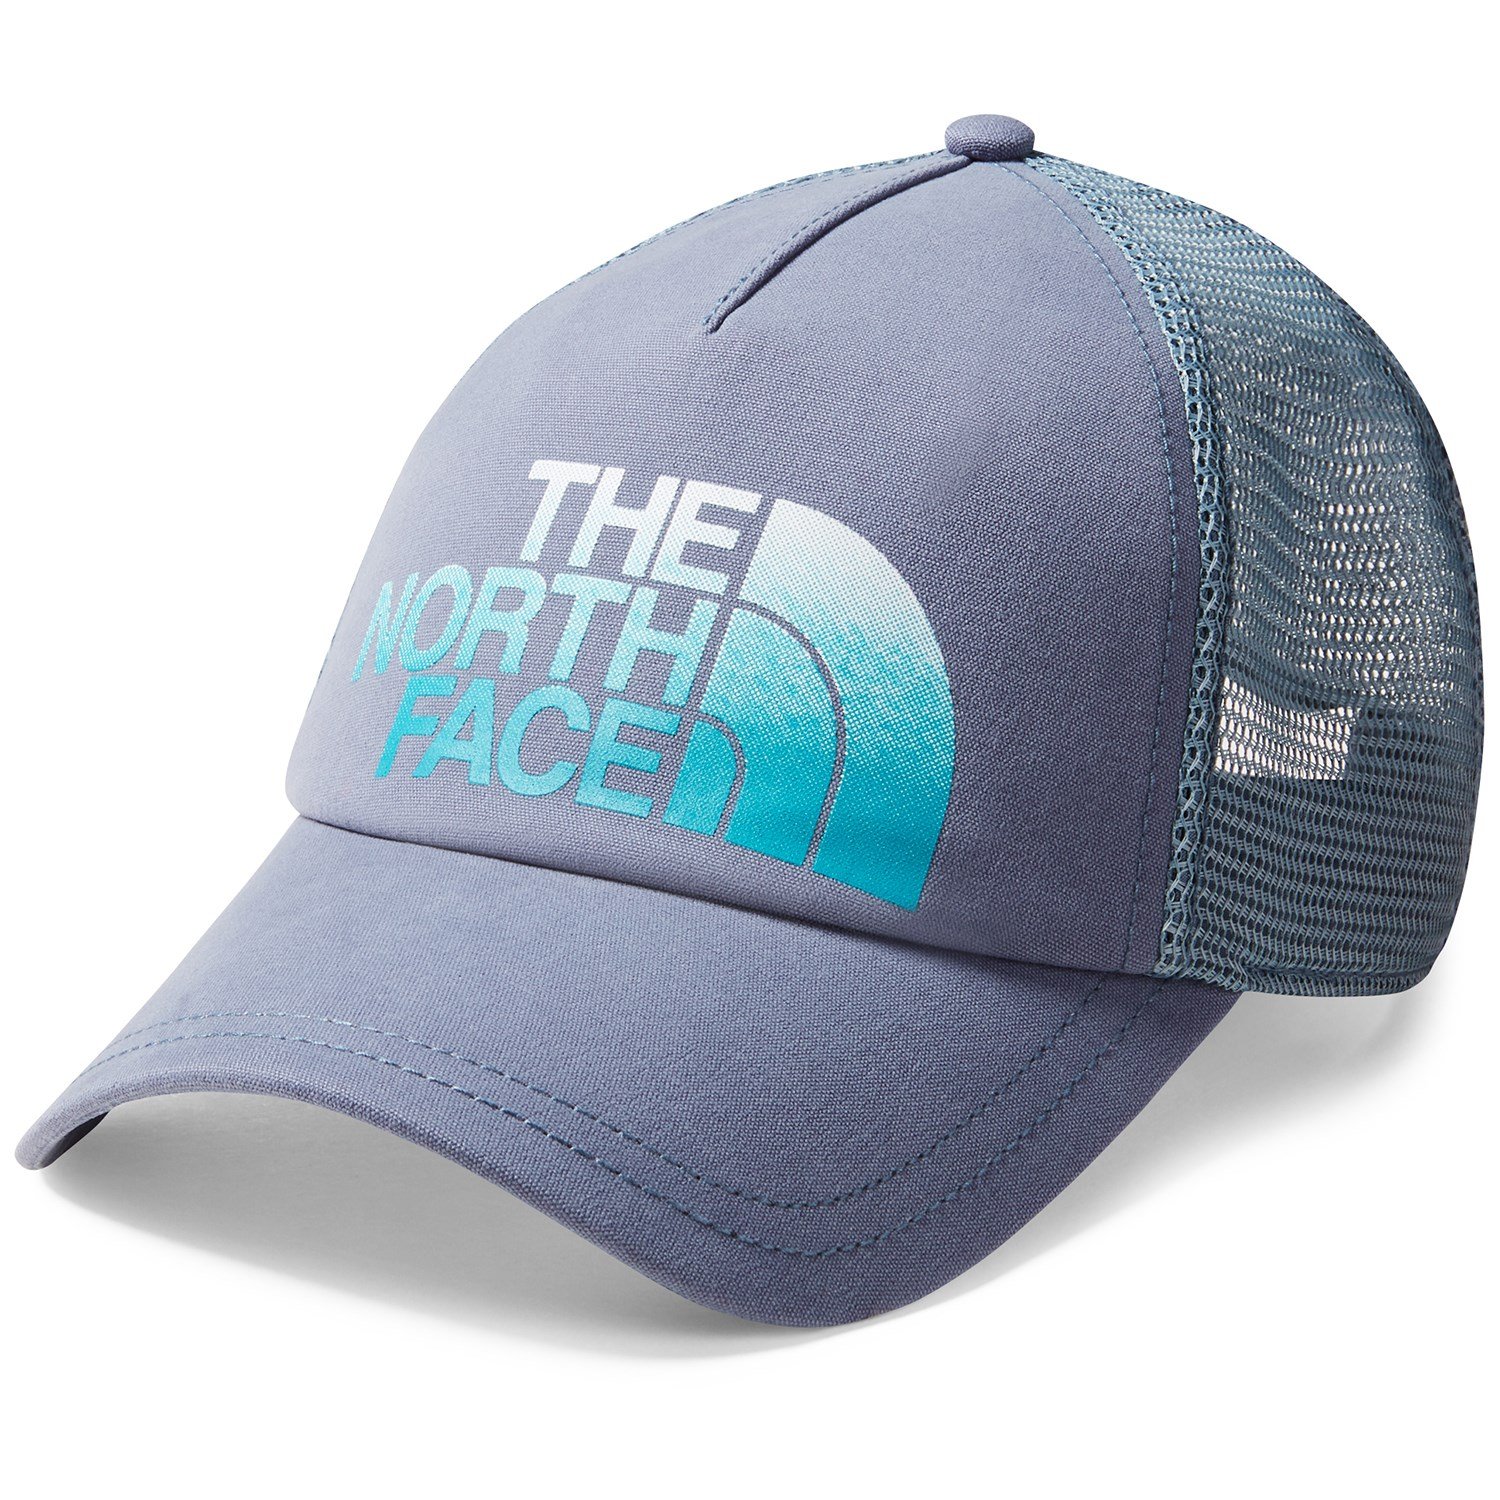 north face women's hats sale